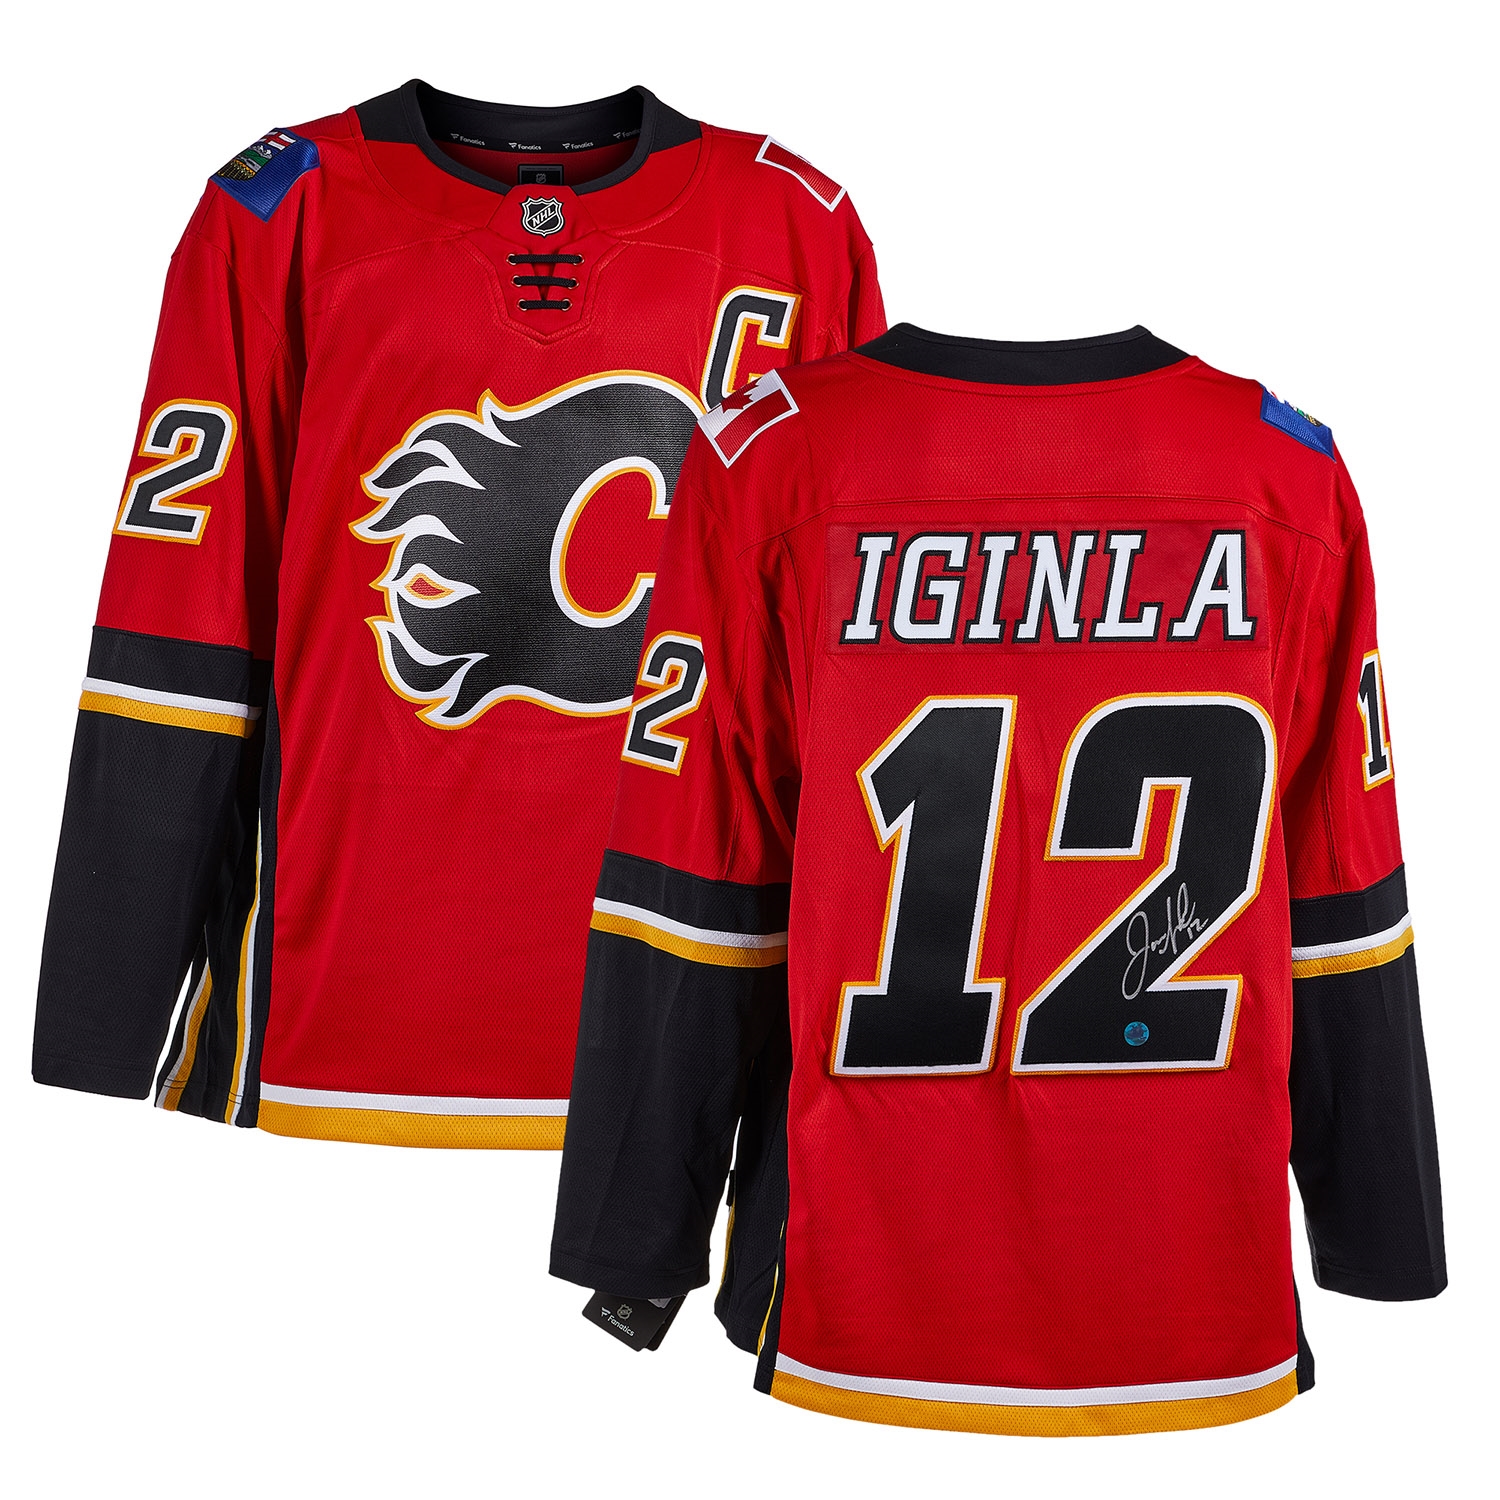 Jarome Iginla Autographed Calgary Flames Fanatics Jersey